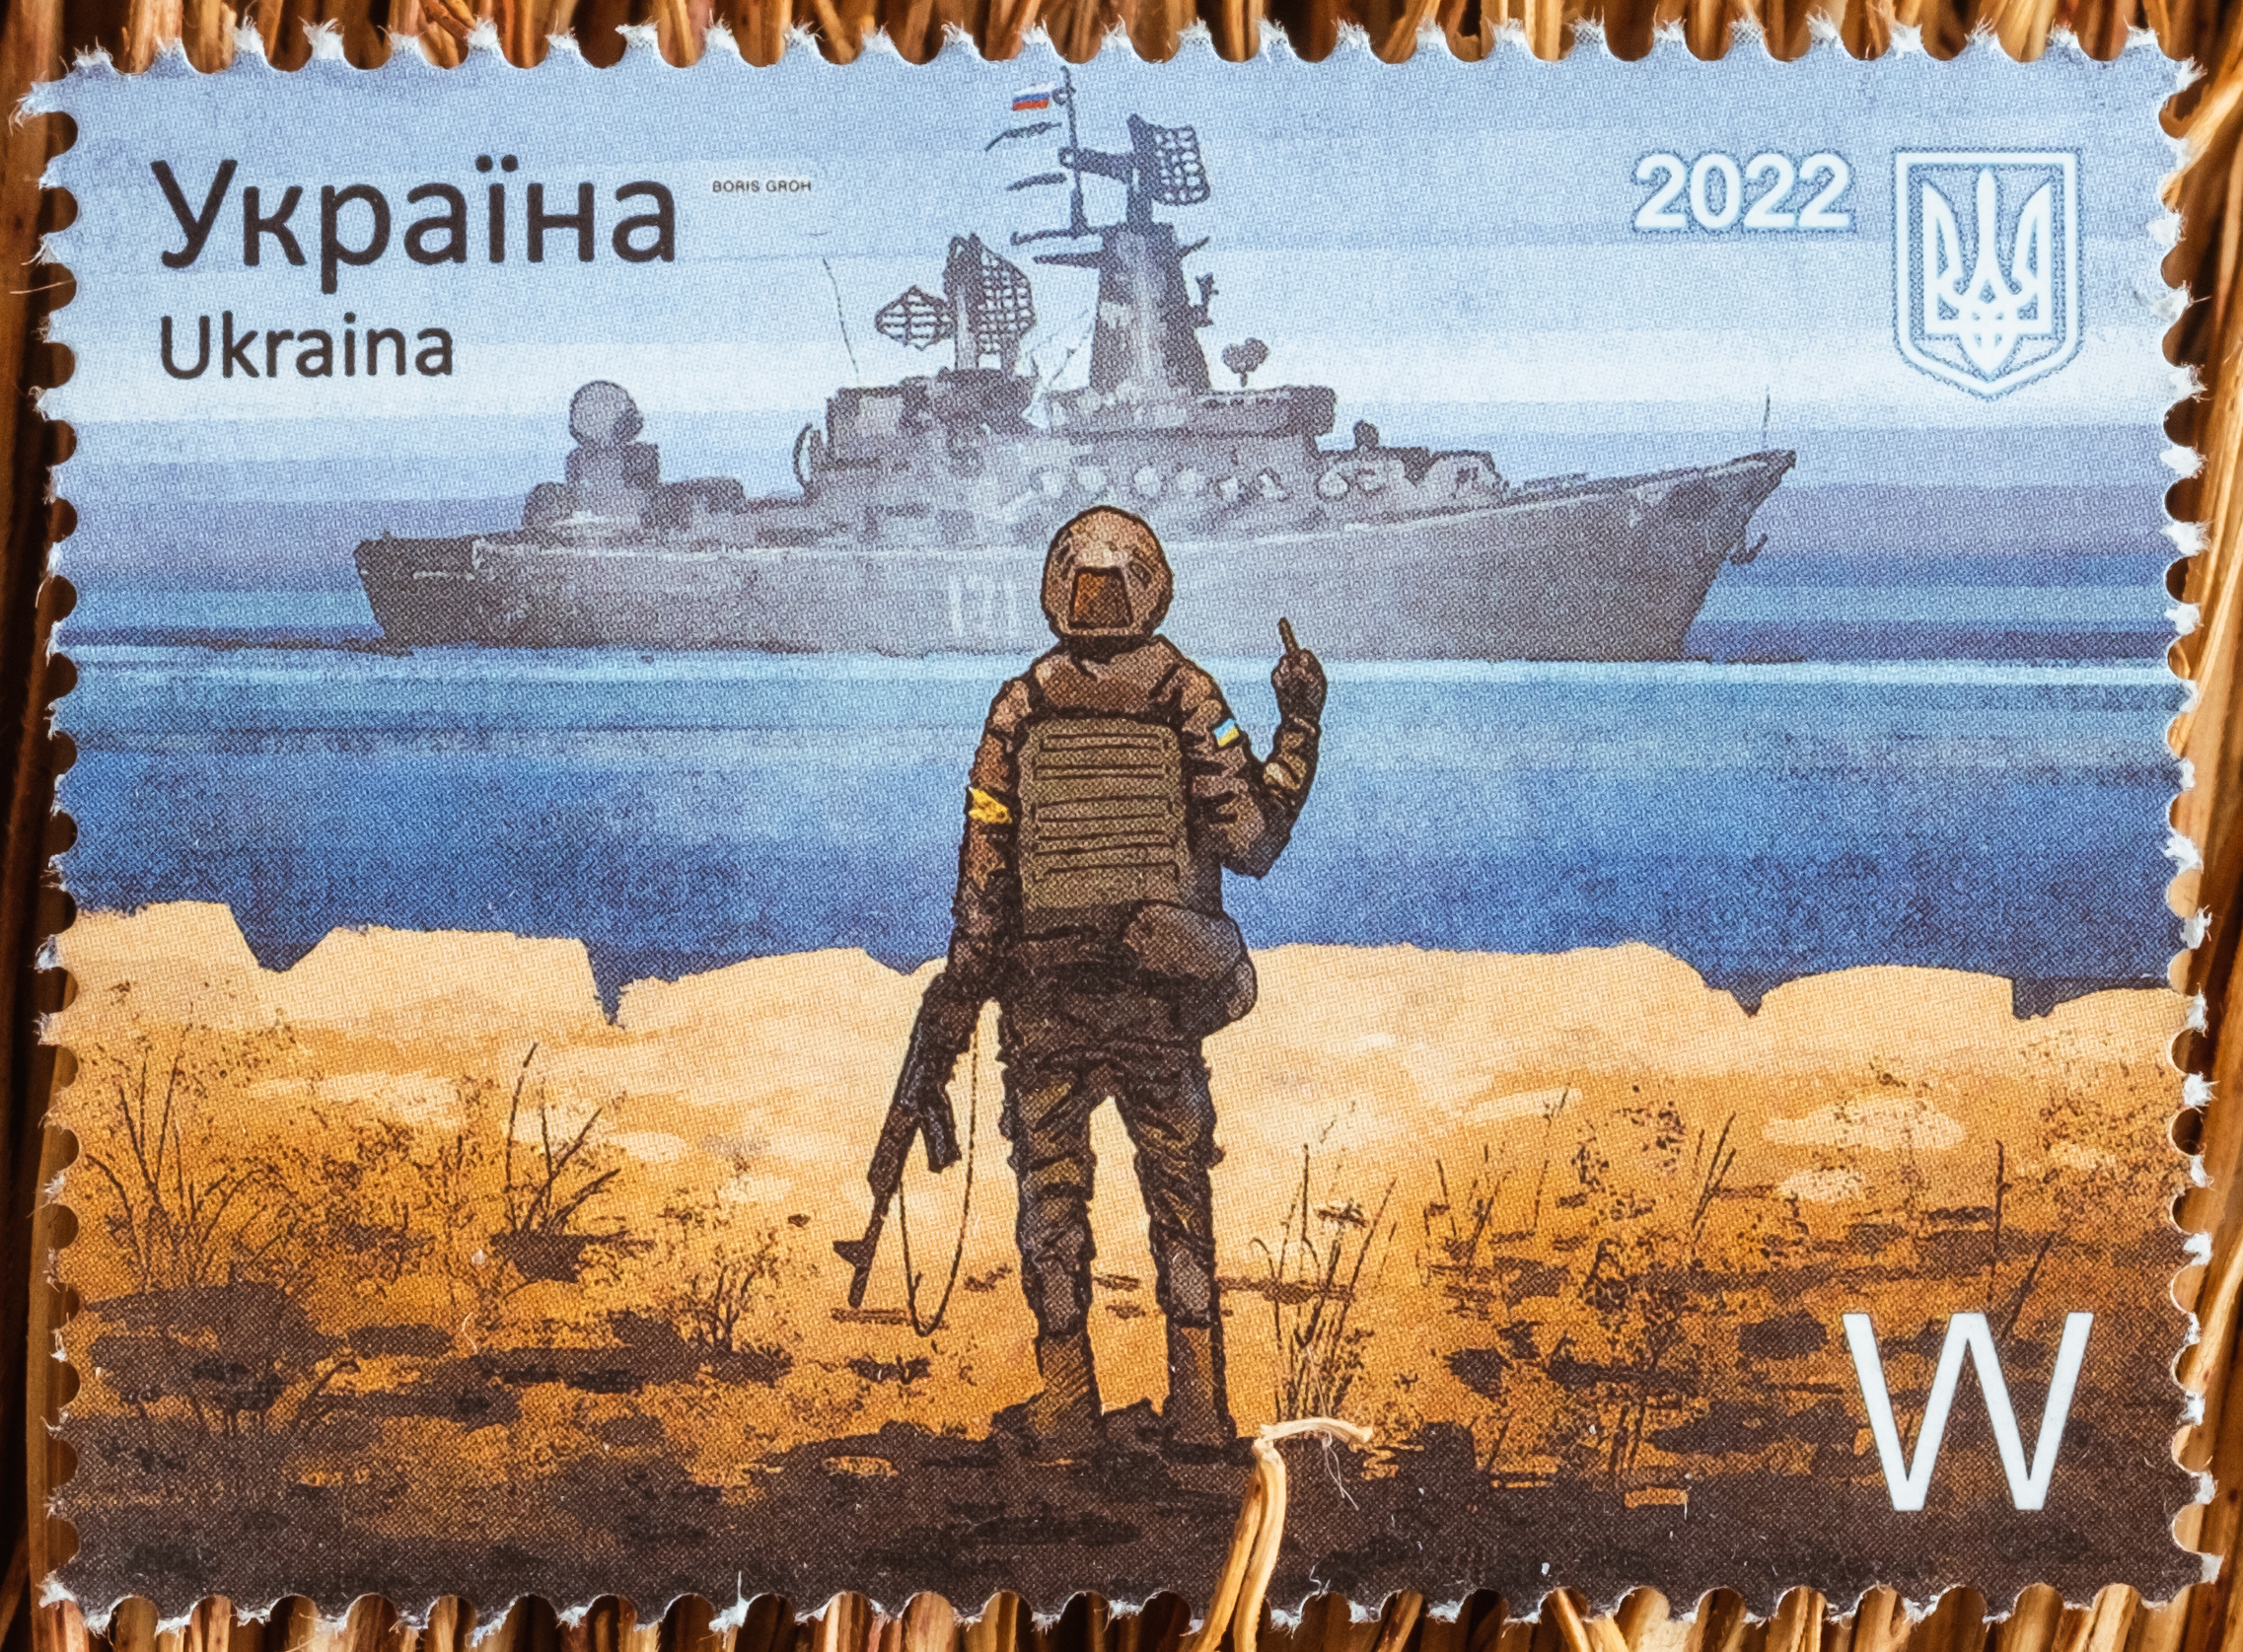 Ukraine recaptures Snake Island: Emerging Europe this week